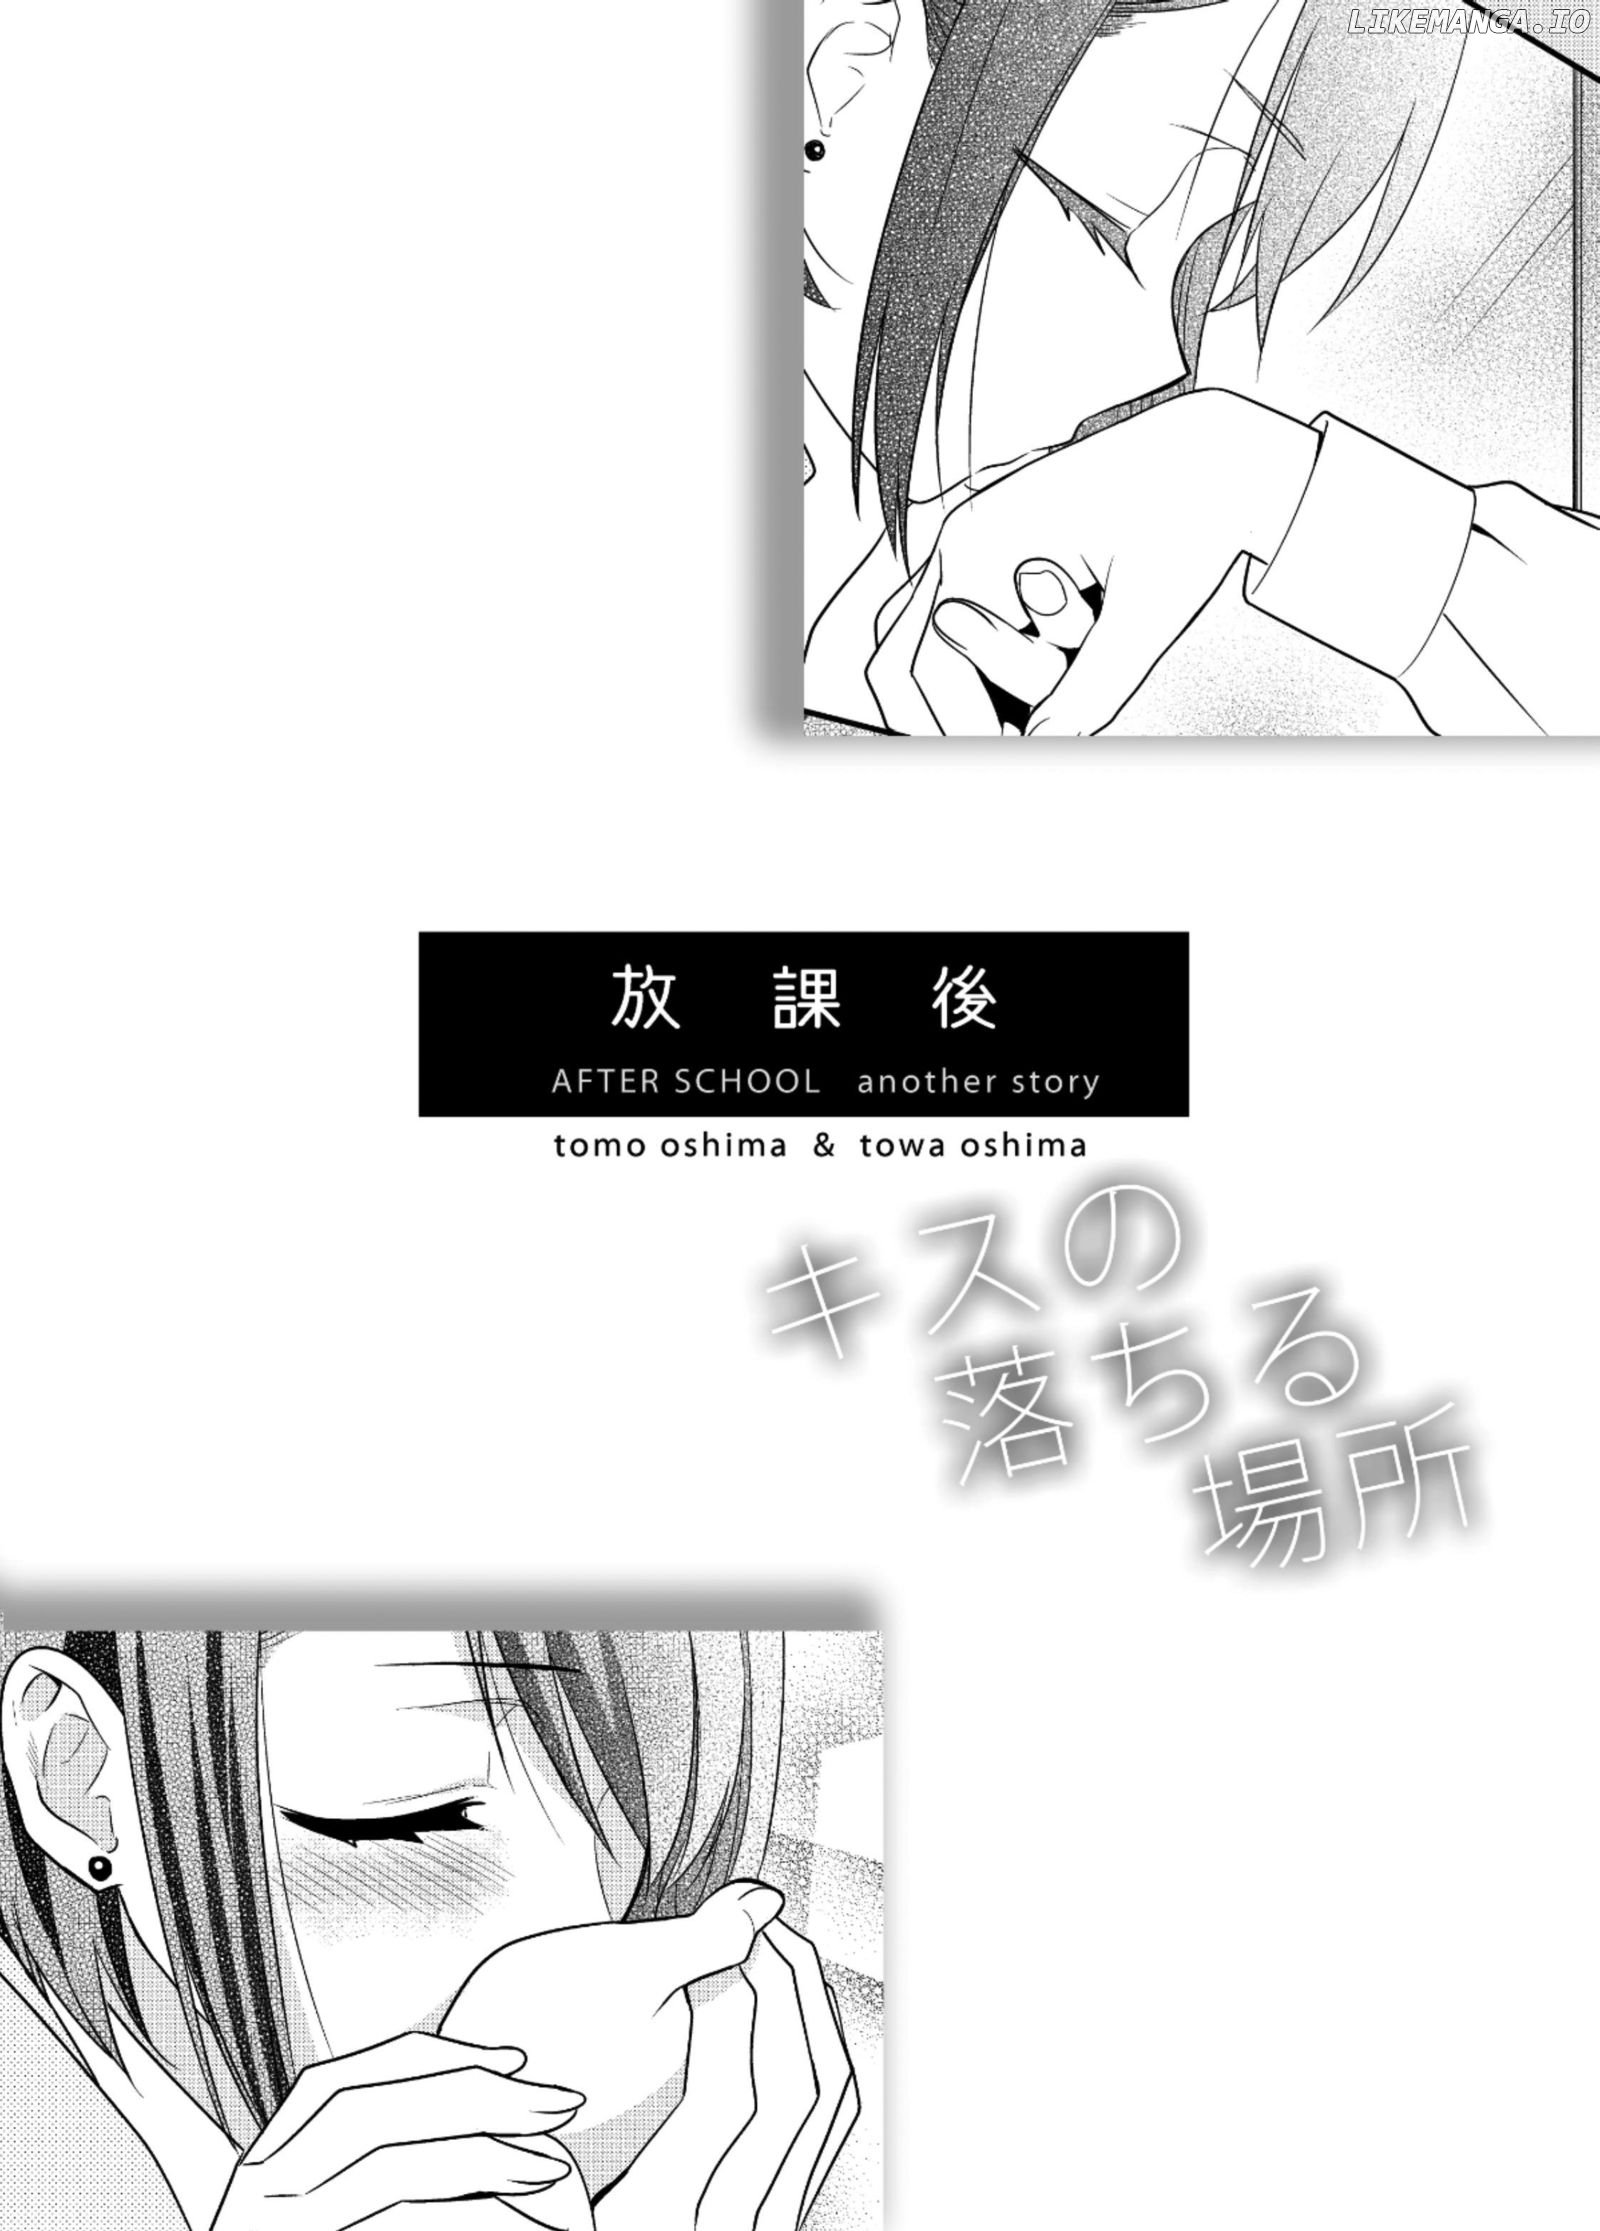 After School (OOSHIMA Tomo & OOSHIMA Towa) chapter 7.5 - page 2